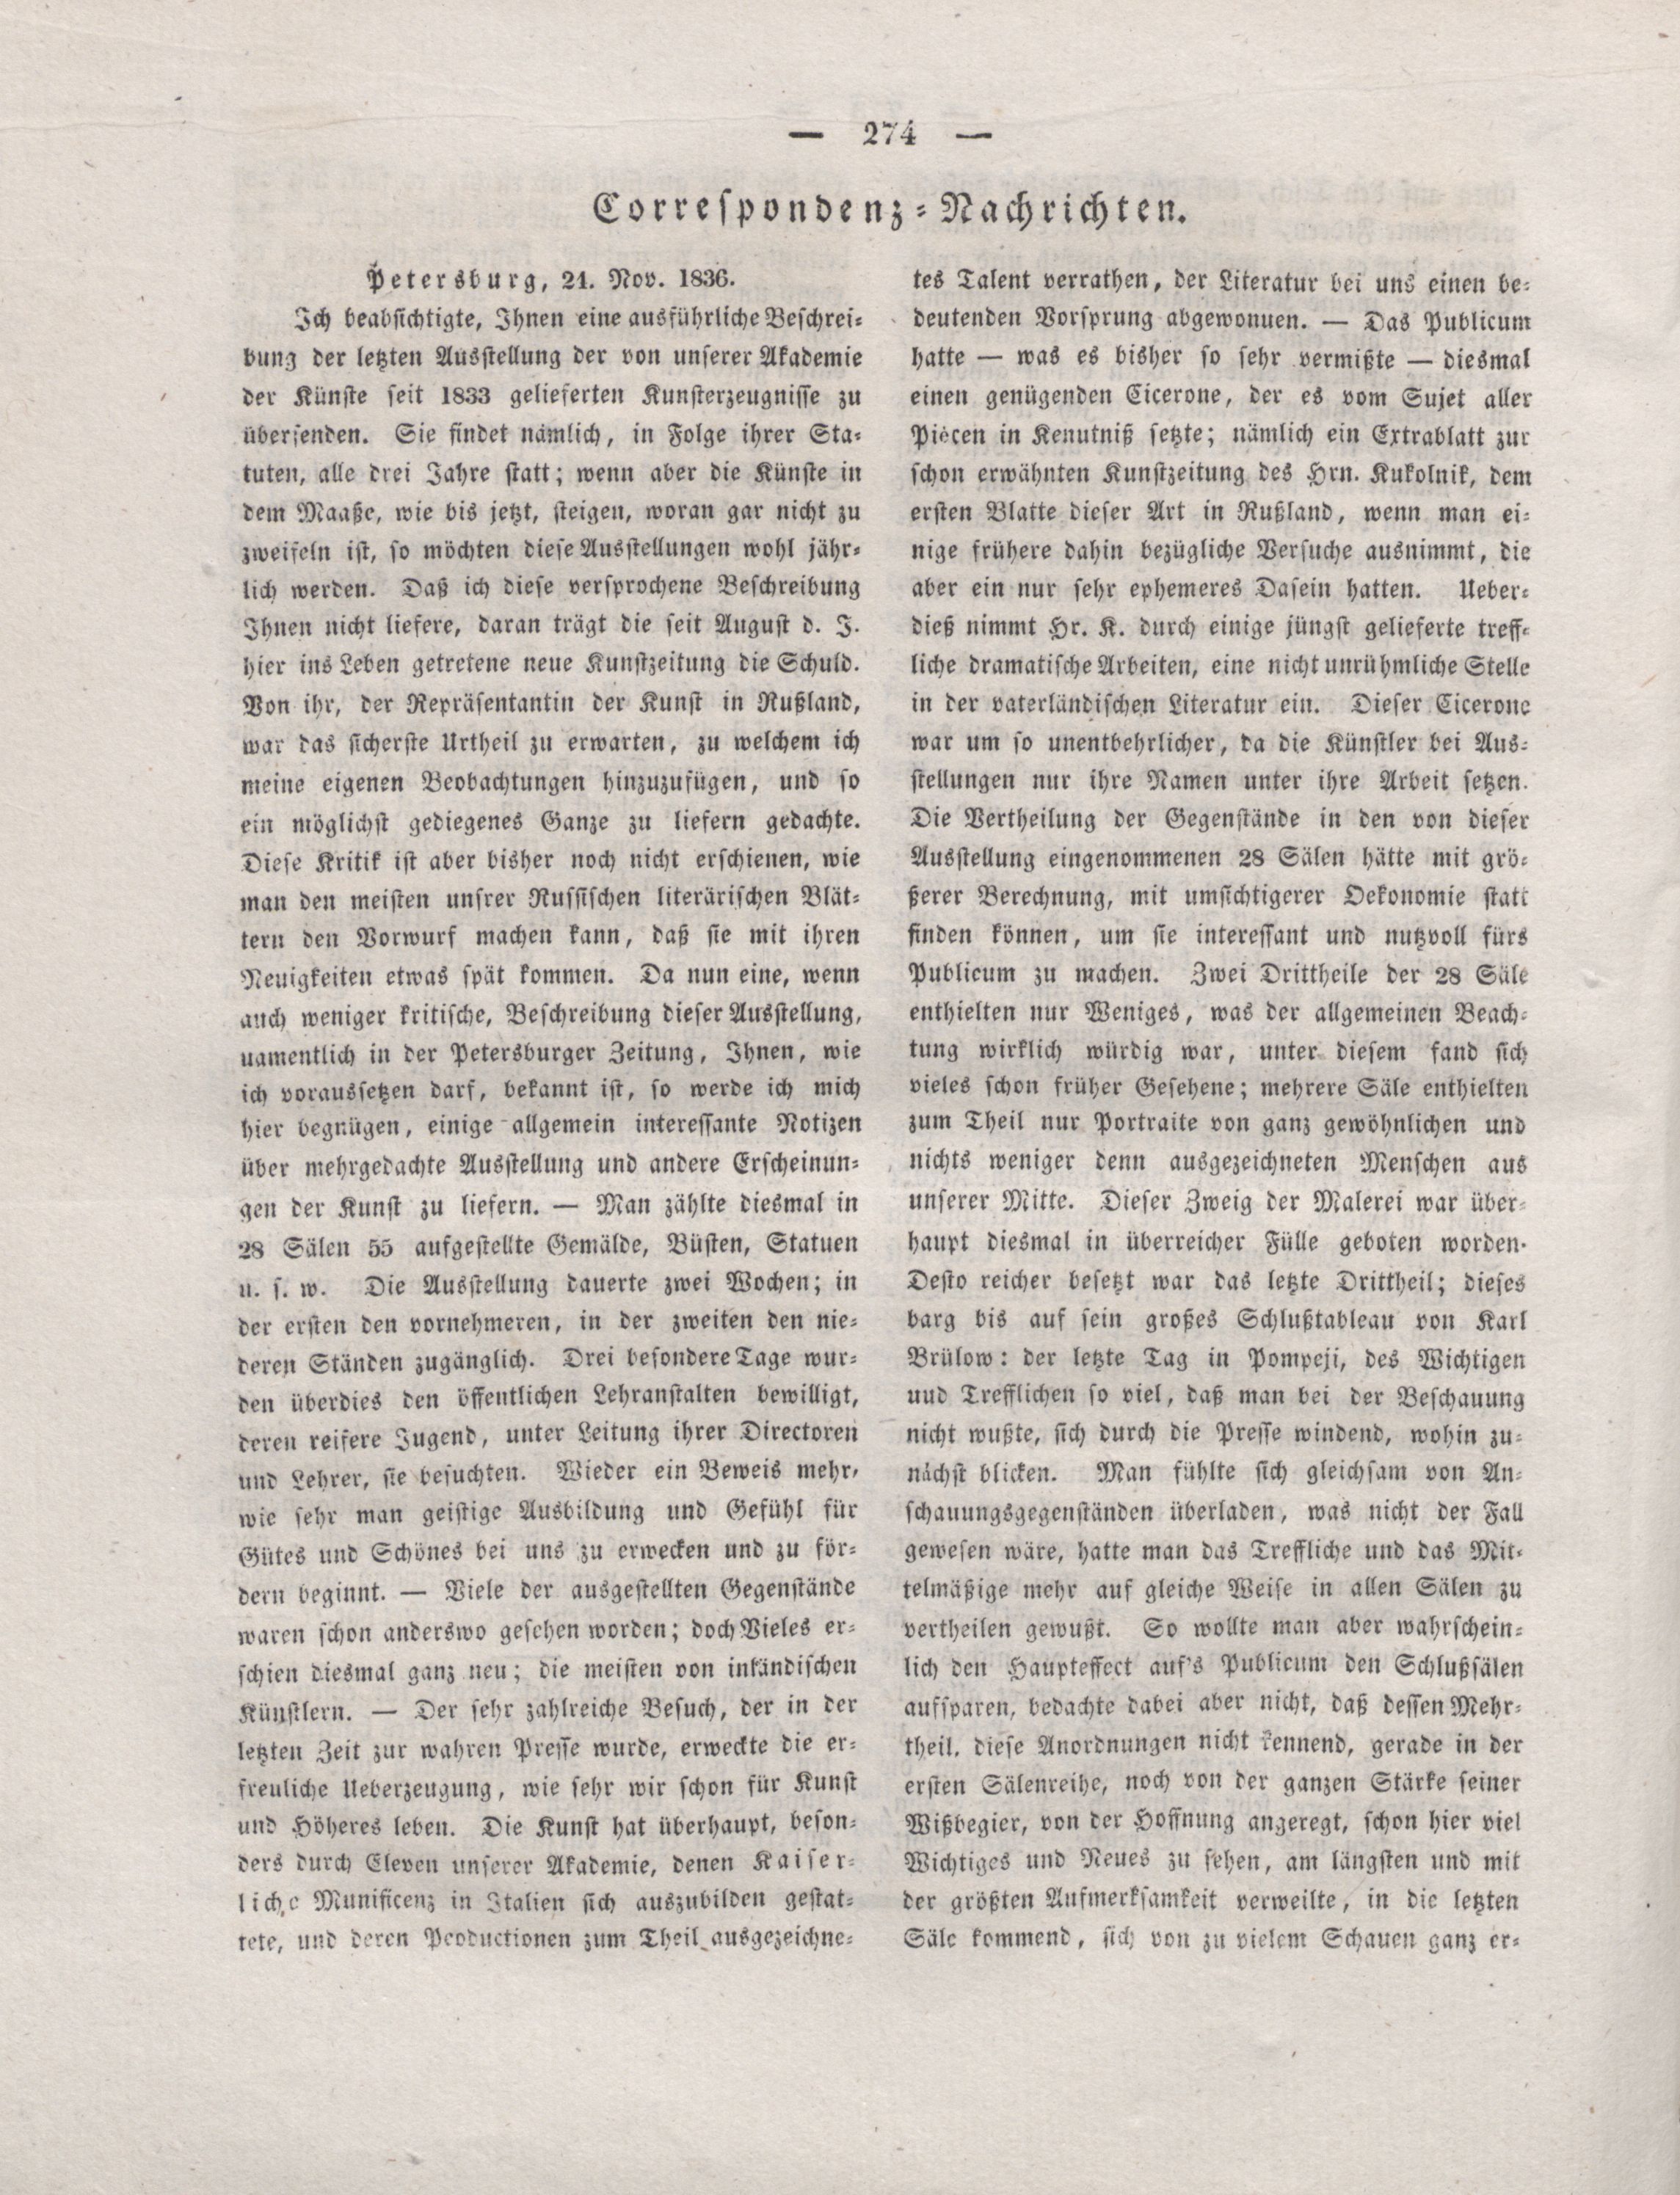 Der Refraktor [1836] (1836) | 275. (274) Main body of text